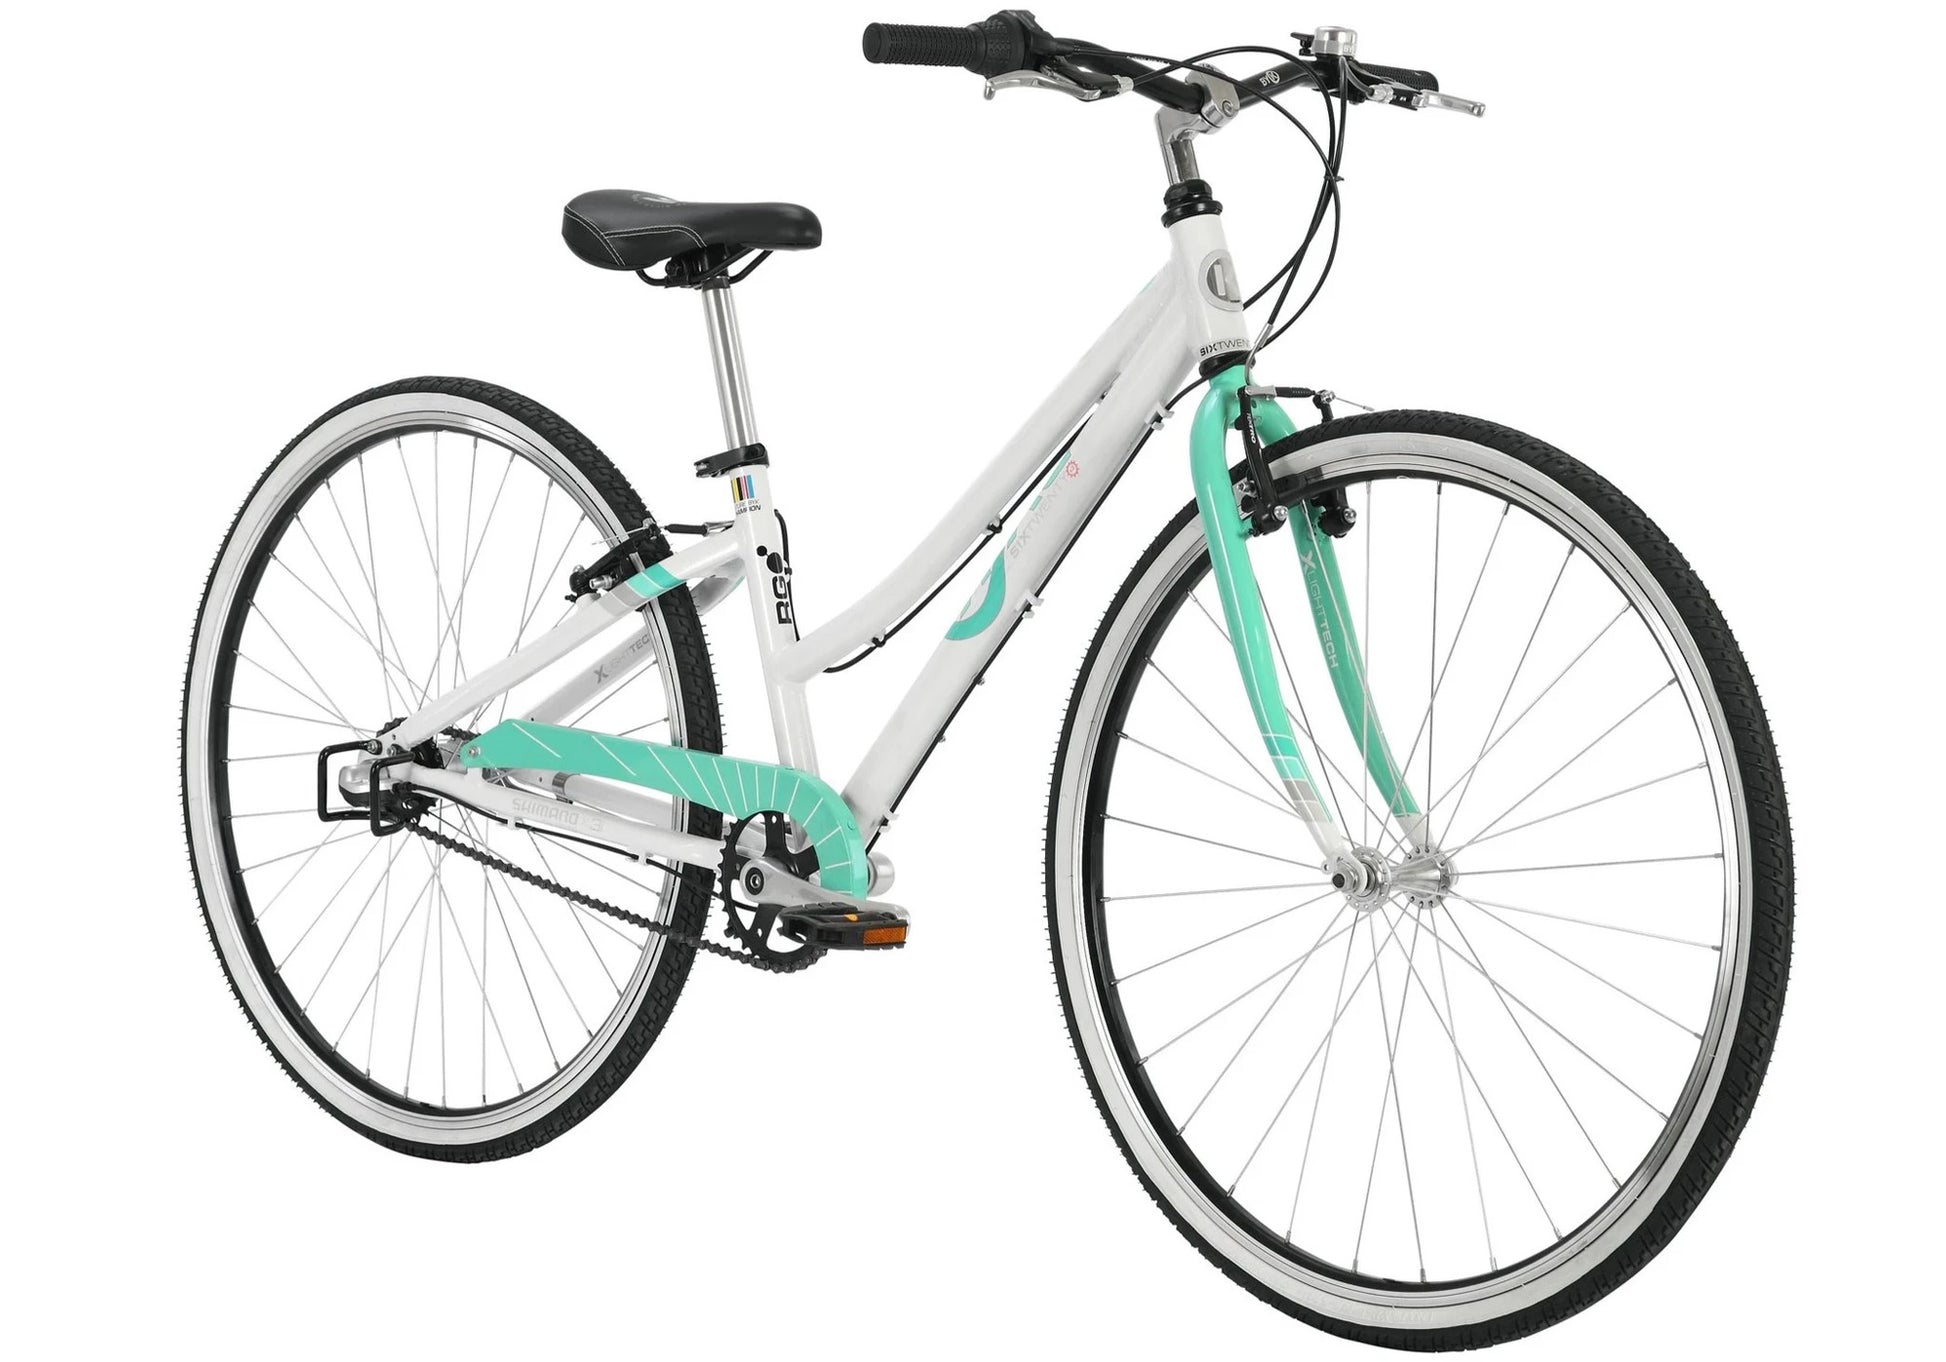 BYK E620x3i 3 Speed Girls Bicycle, Green/White